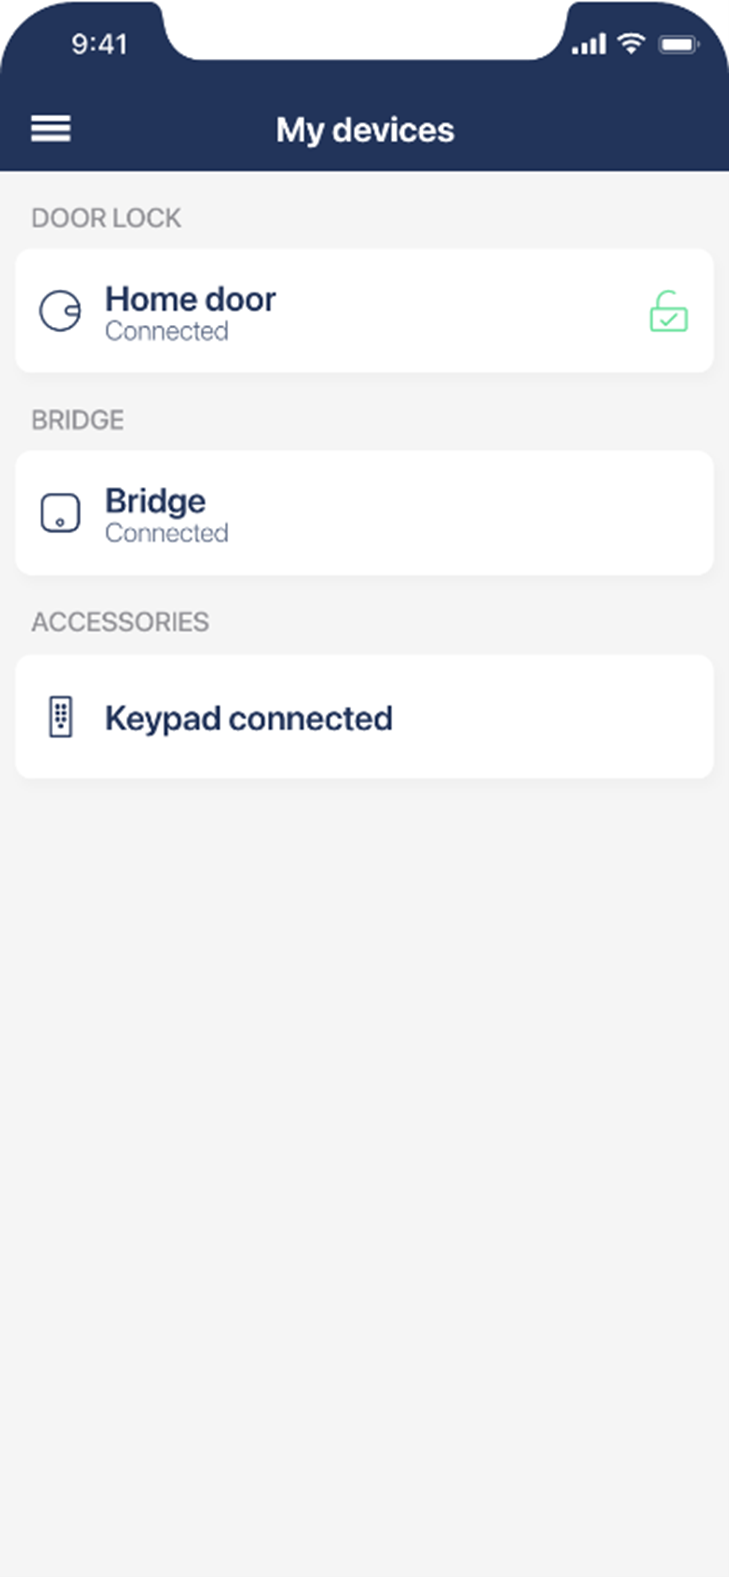 tedee app - my devices tab